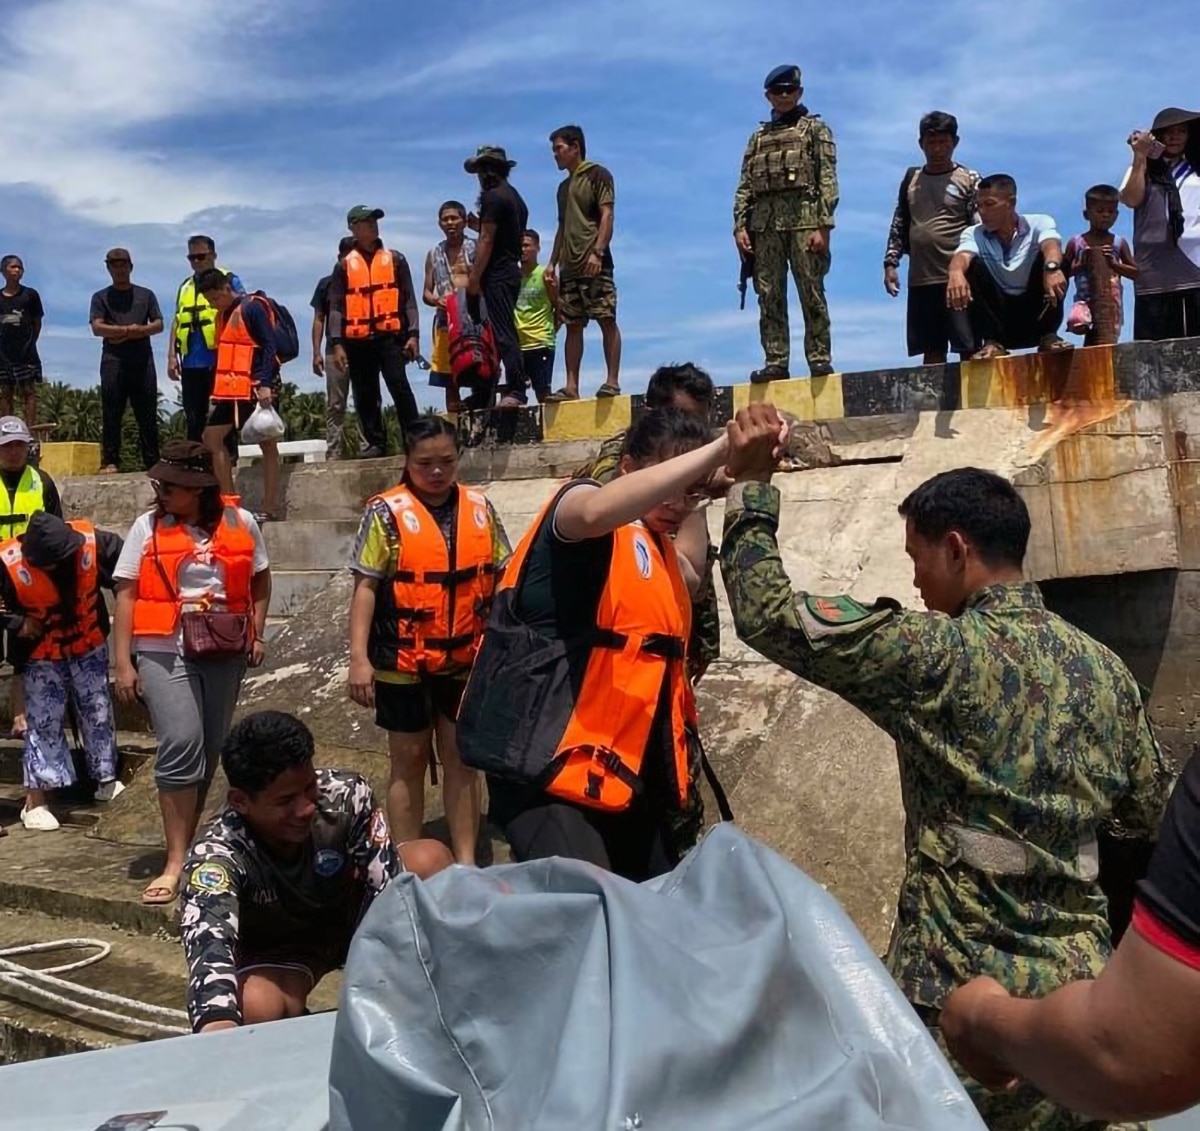 16 rescued from capsized boat off Zamboanga City